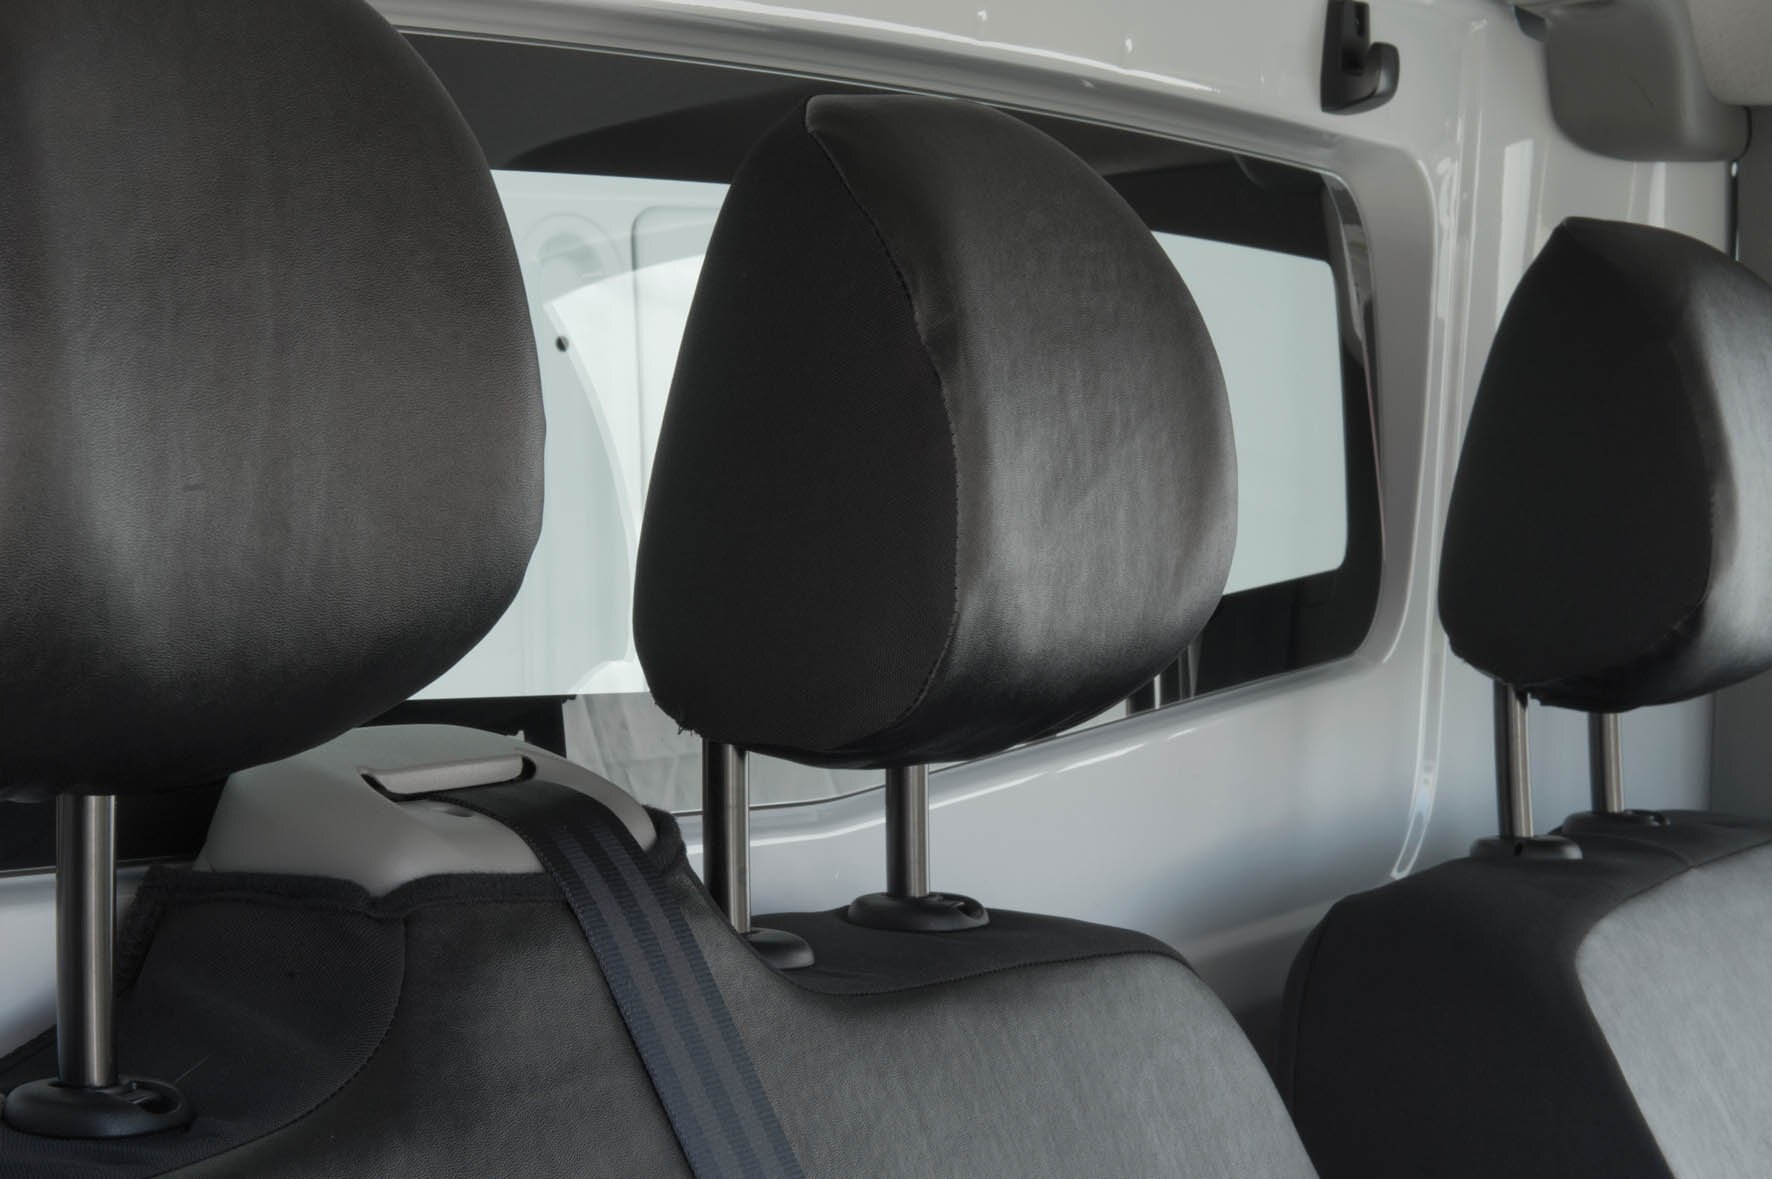 Housse de siège Transporter en simili cuir pour Renault Trafic II, Opel Vivaro, Nissan Primastar, siège simple et double